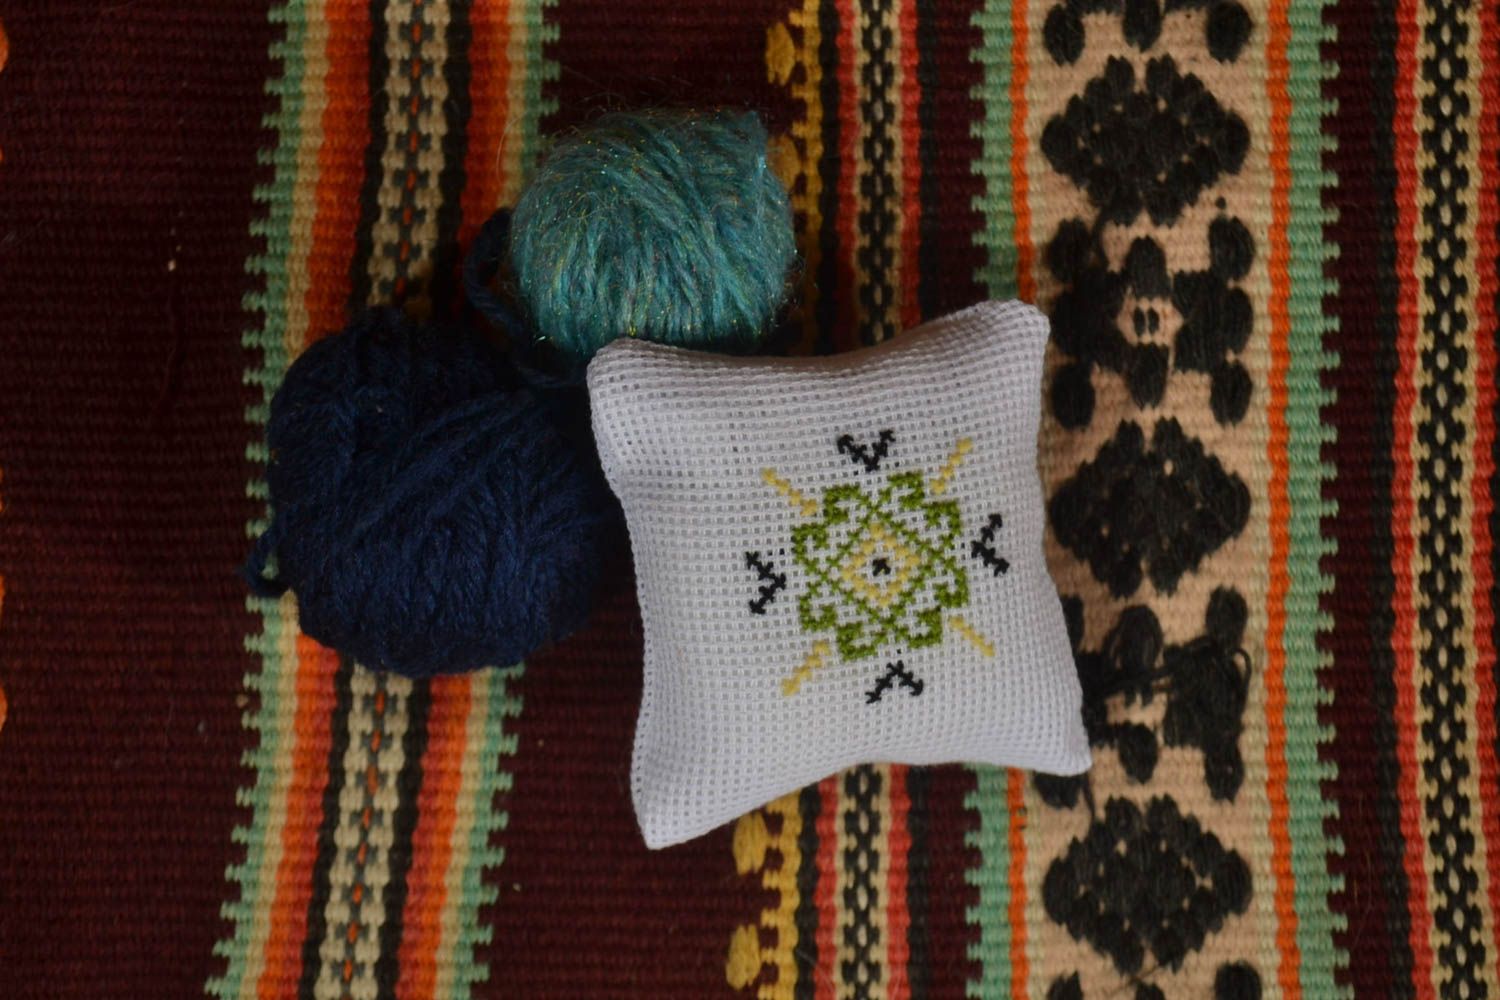 Handmade pin cushion sewing supplies embroidery kits homemade decorations photo 1